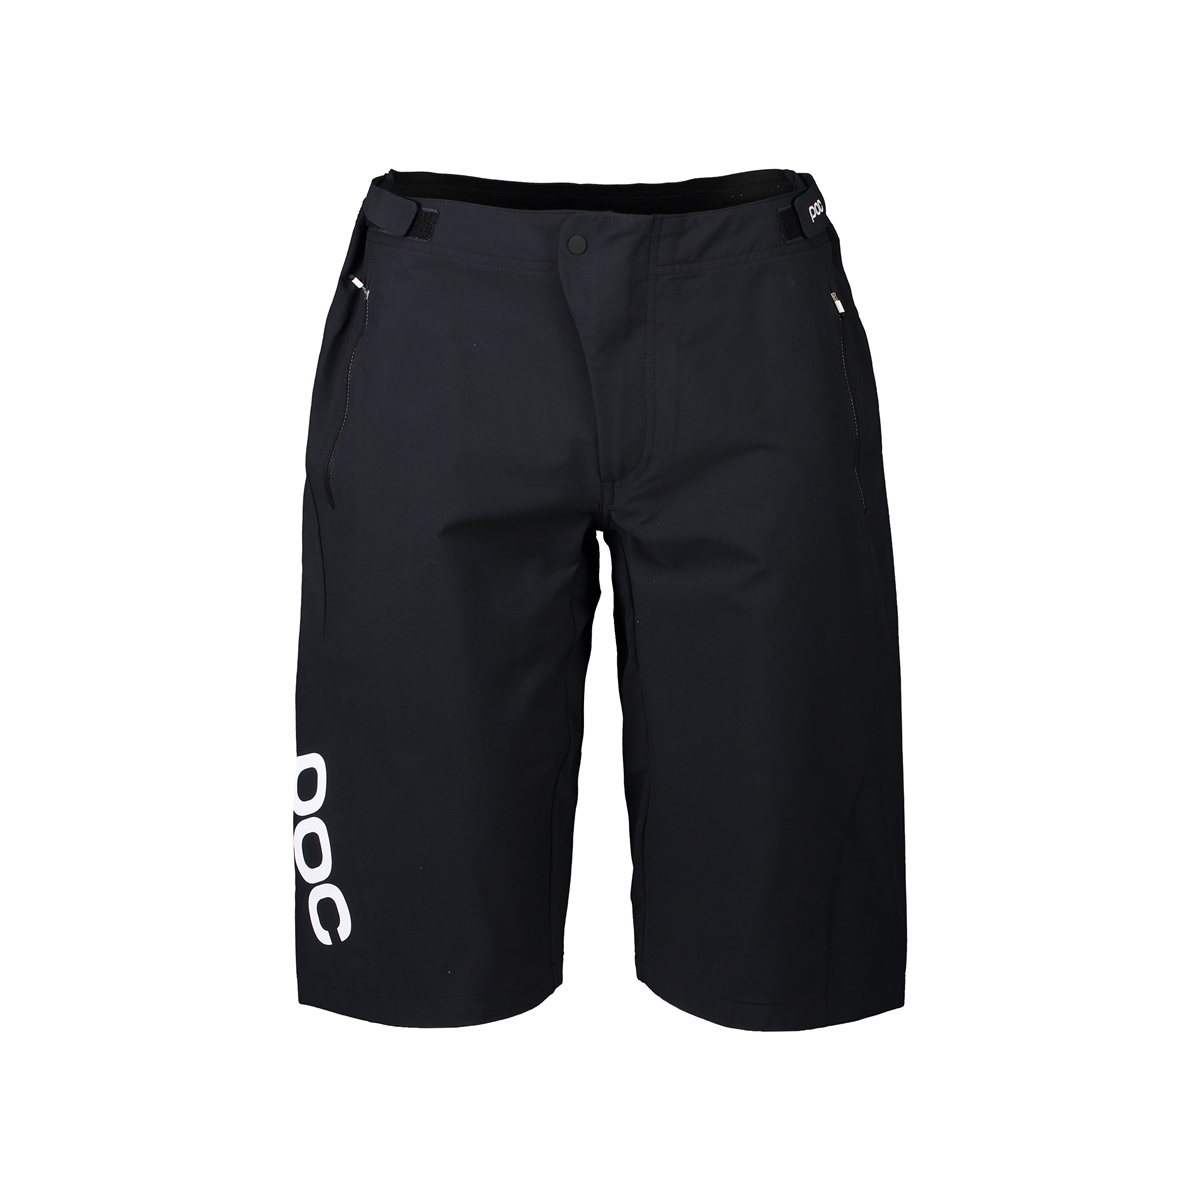 Essential Enduro Shorts black size S